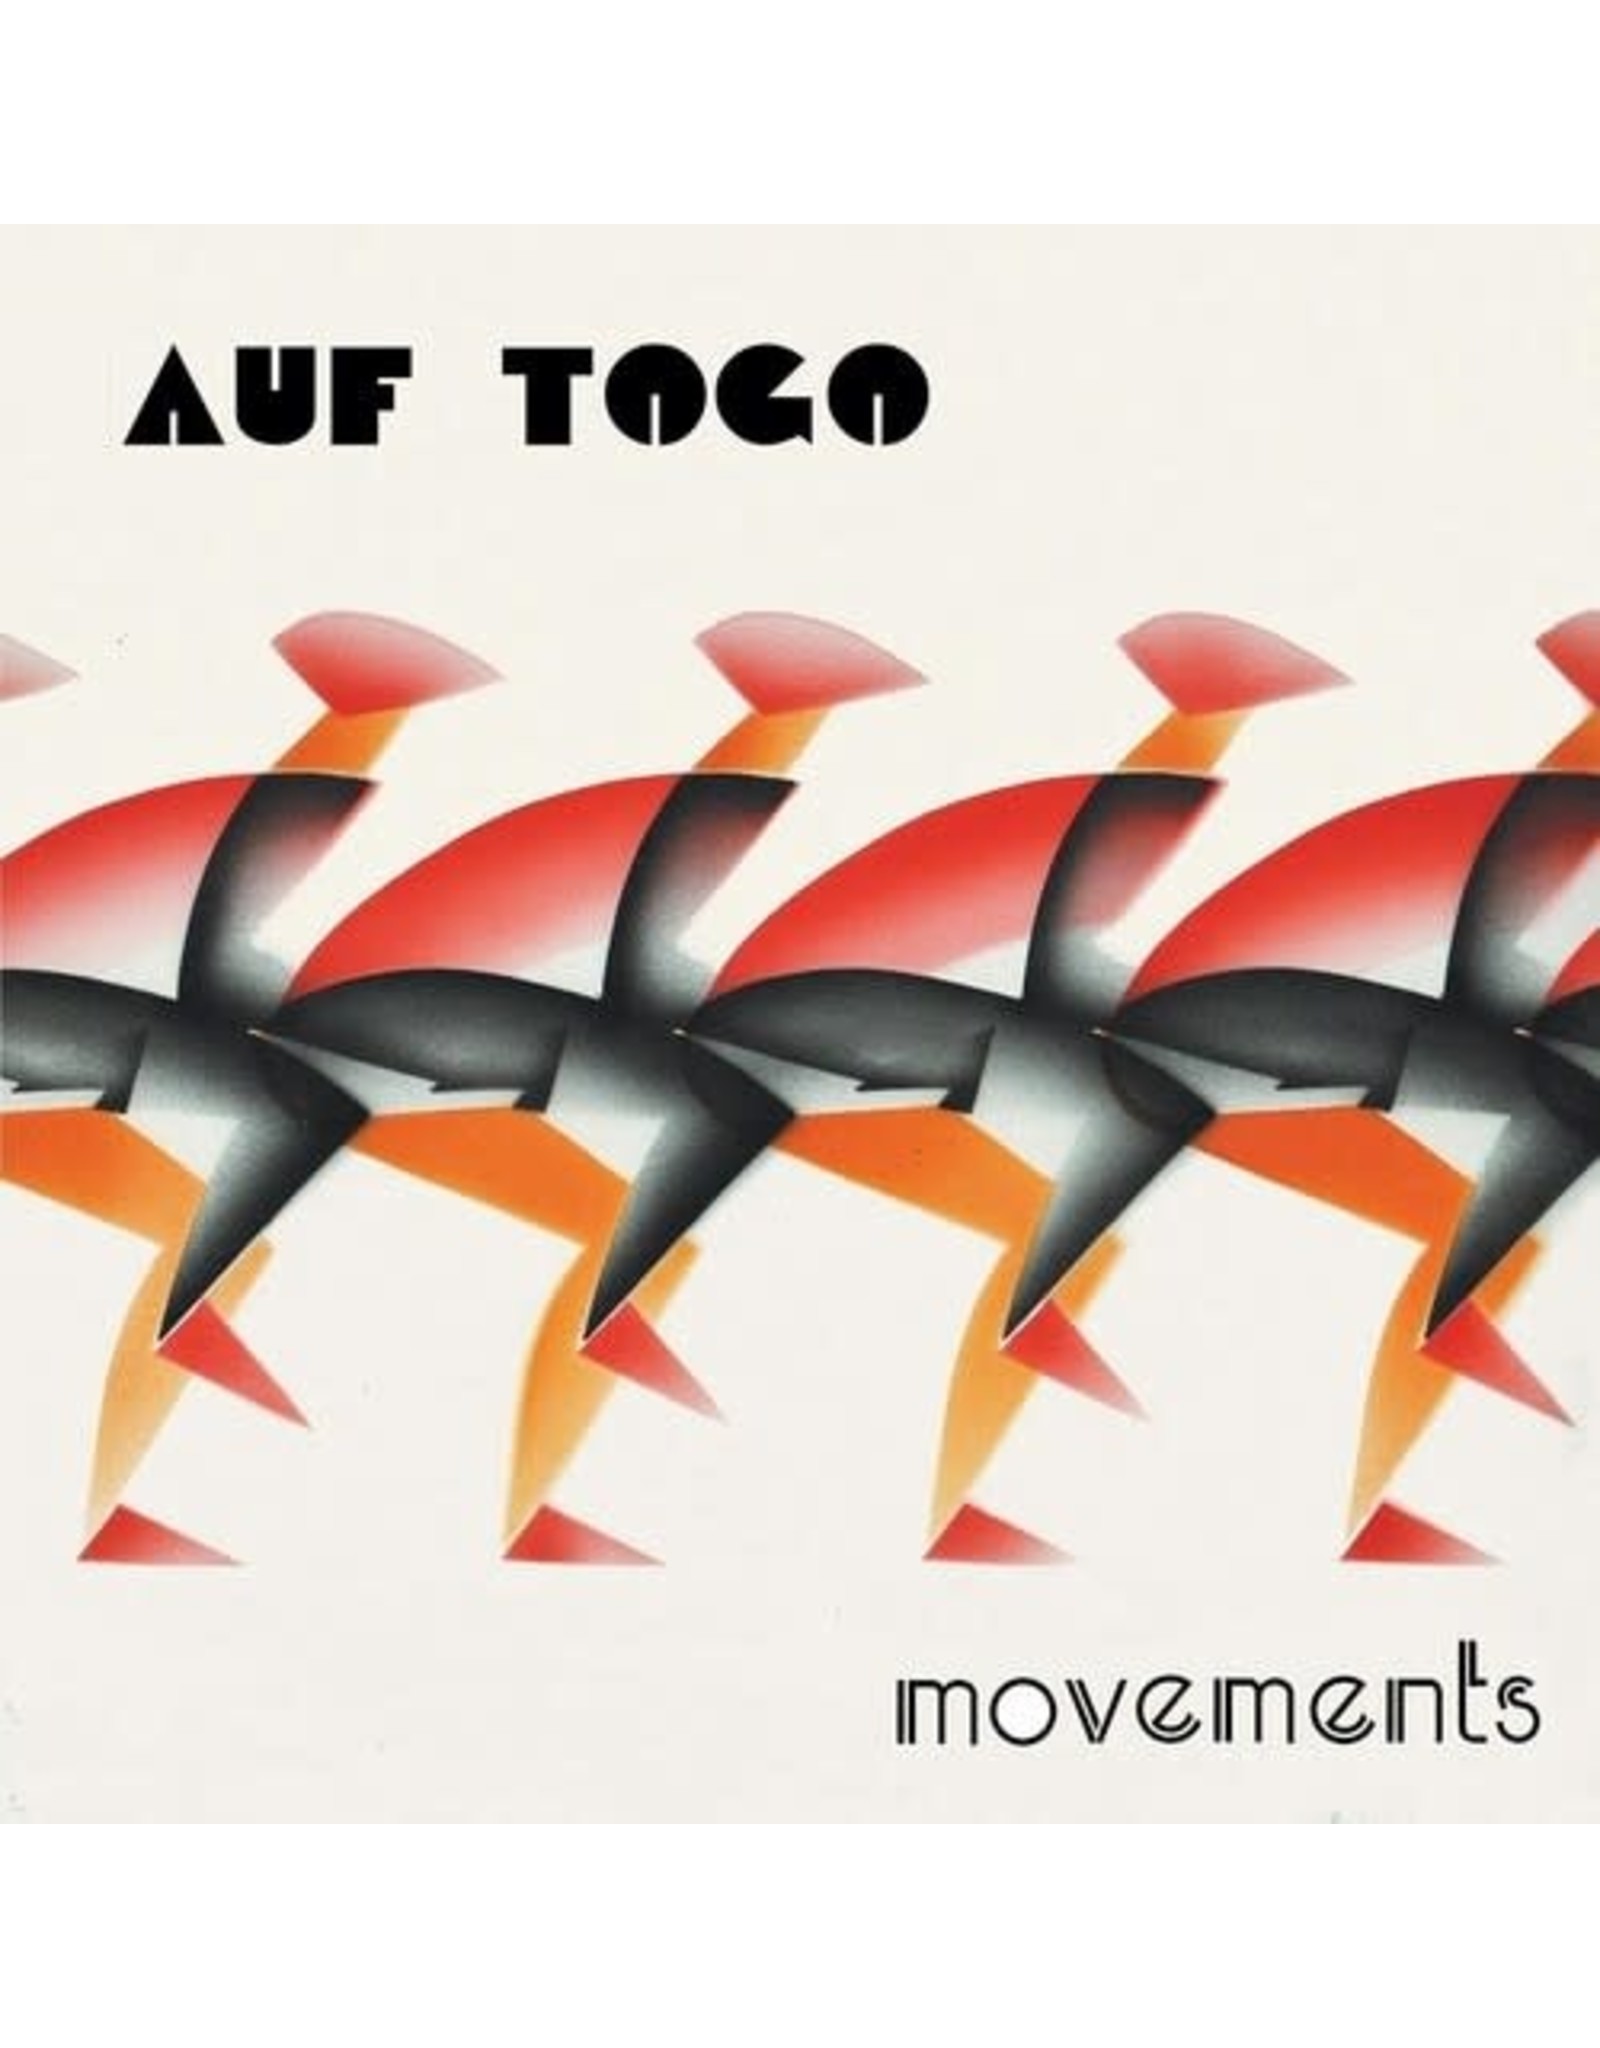 Auf Togo / Movements